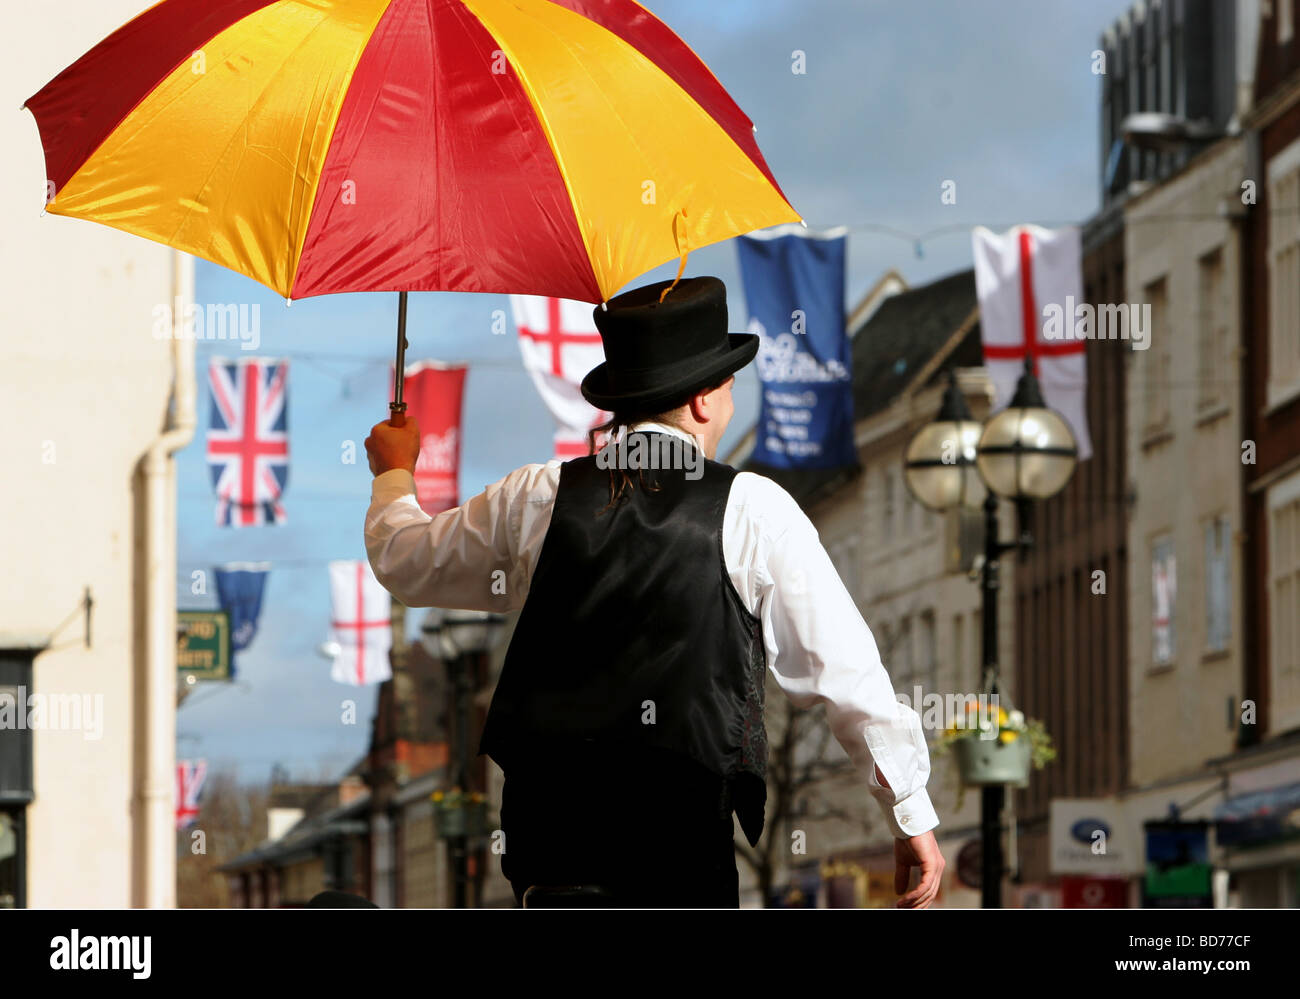 man on stilts holding umbrella on sunny day in English town Stock Photo